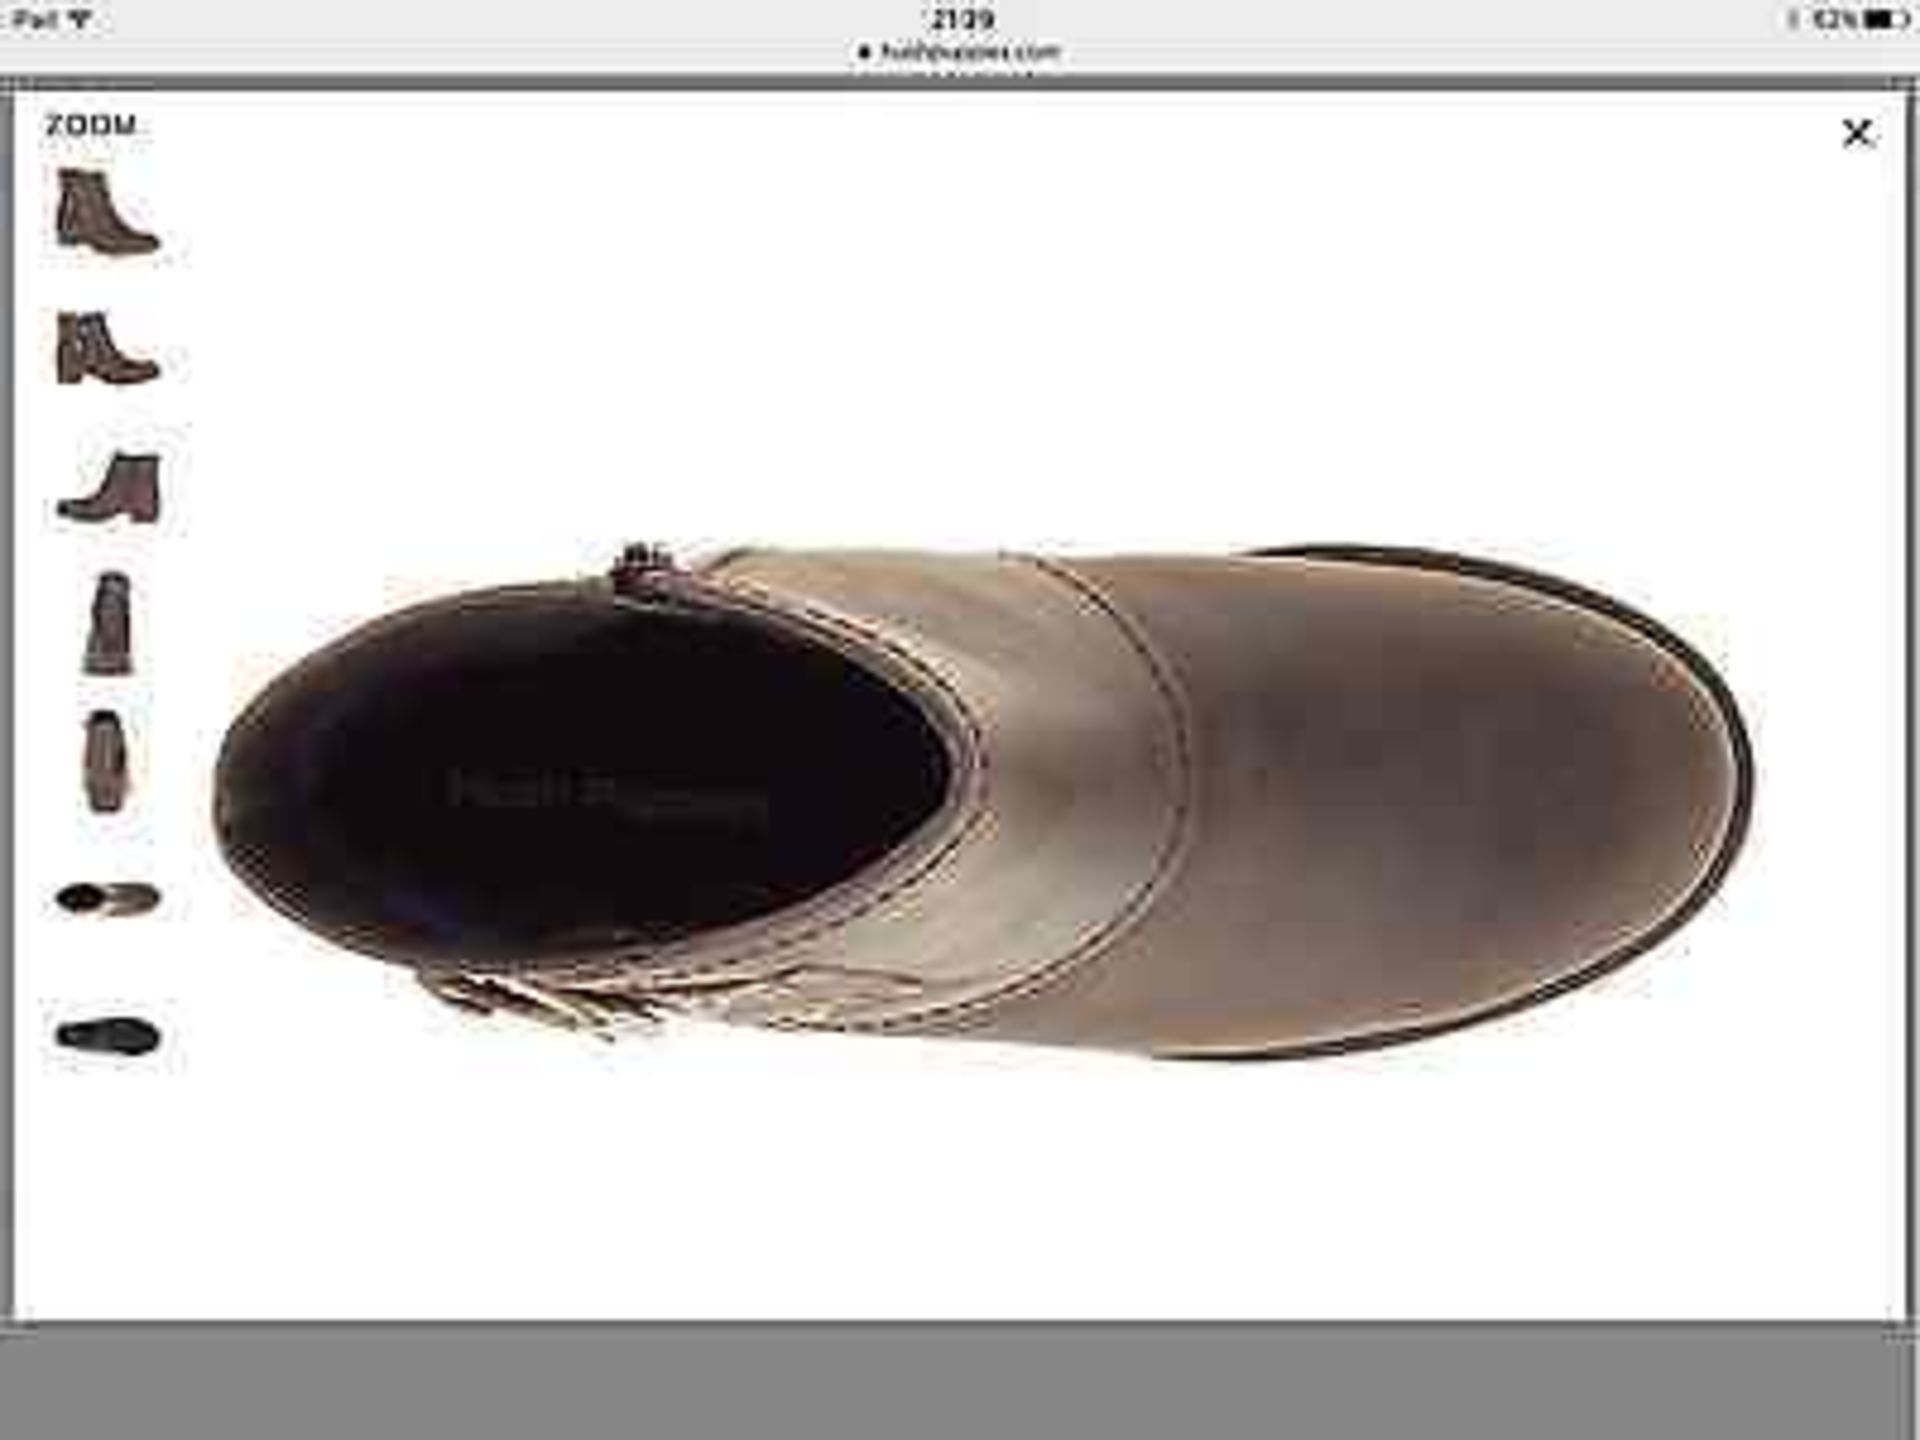 Hush Puppies Dark Brown Proud Overton Nubuck Boot, Size UK 5, RRP $130 (New with box) [Ref: ] - Image 8 of 9